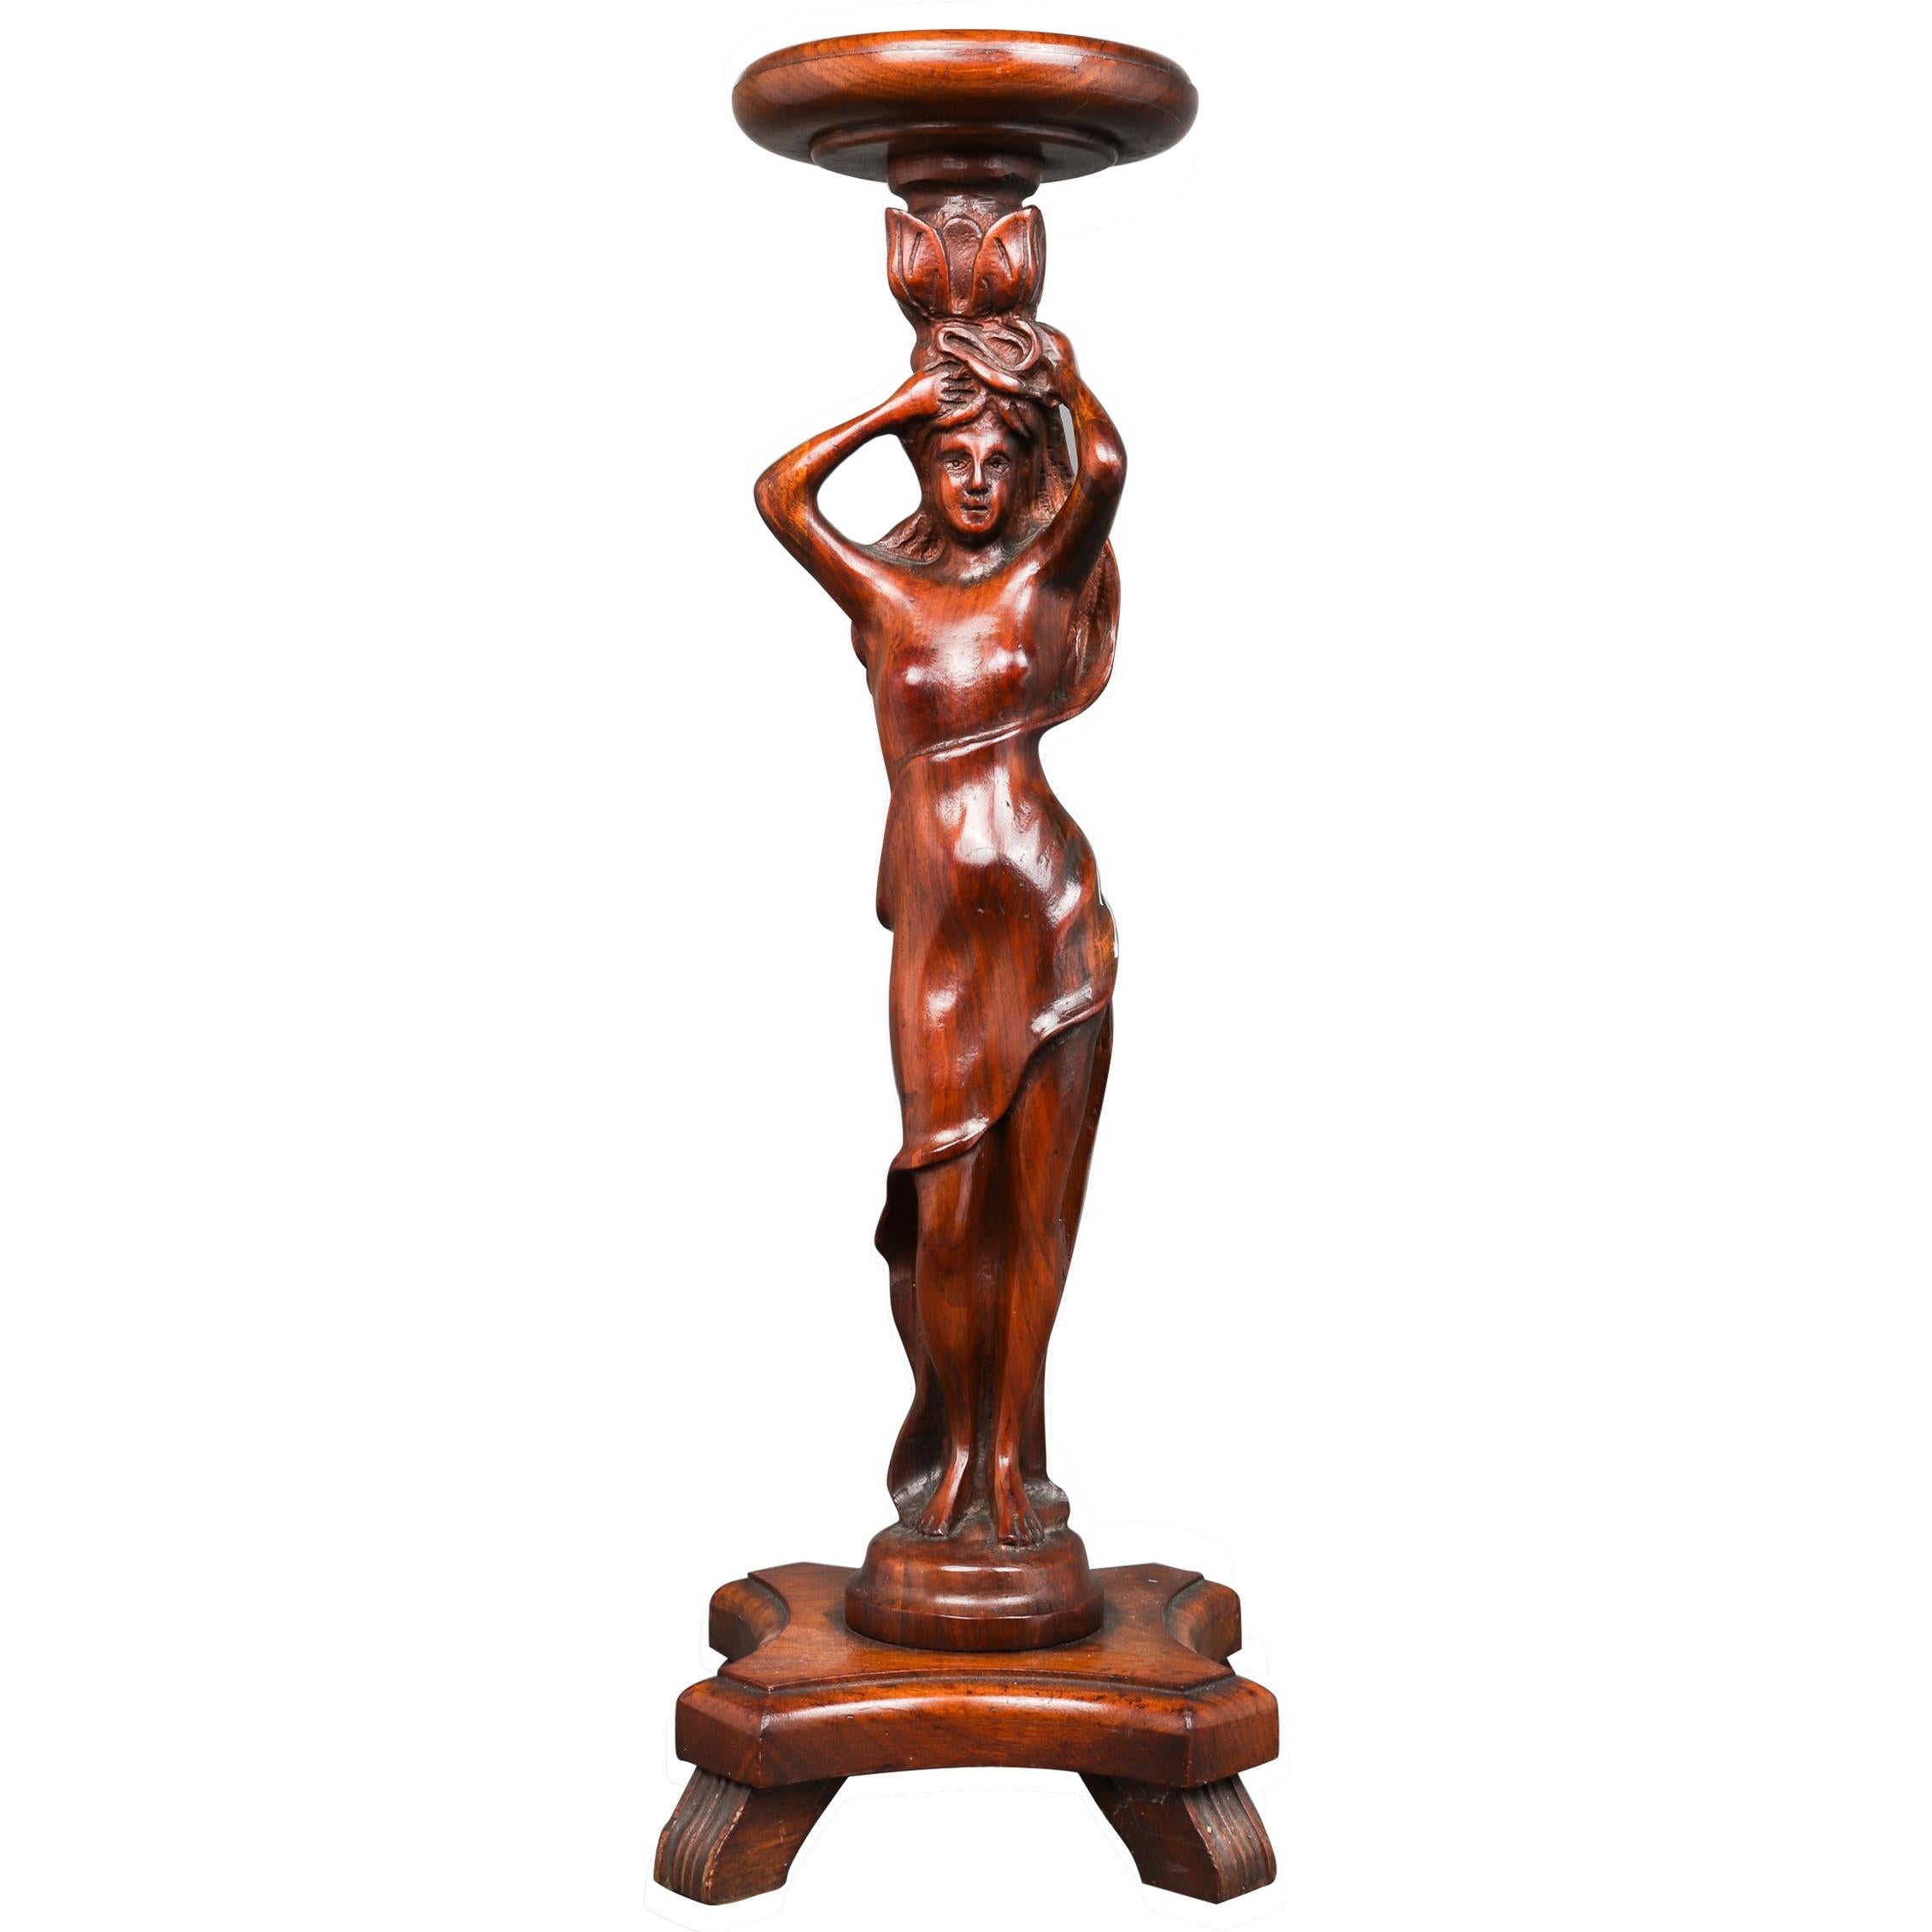 Art Nouveau Carved Wood Figural Pedestal Stand